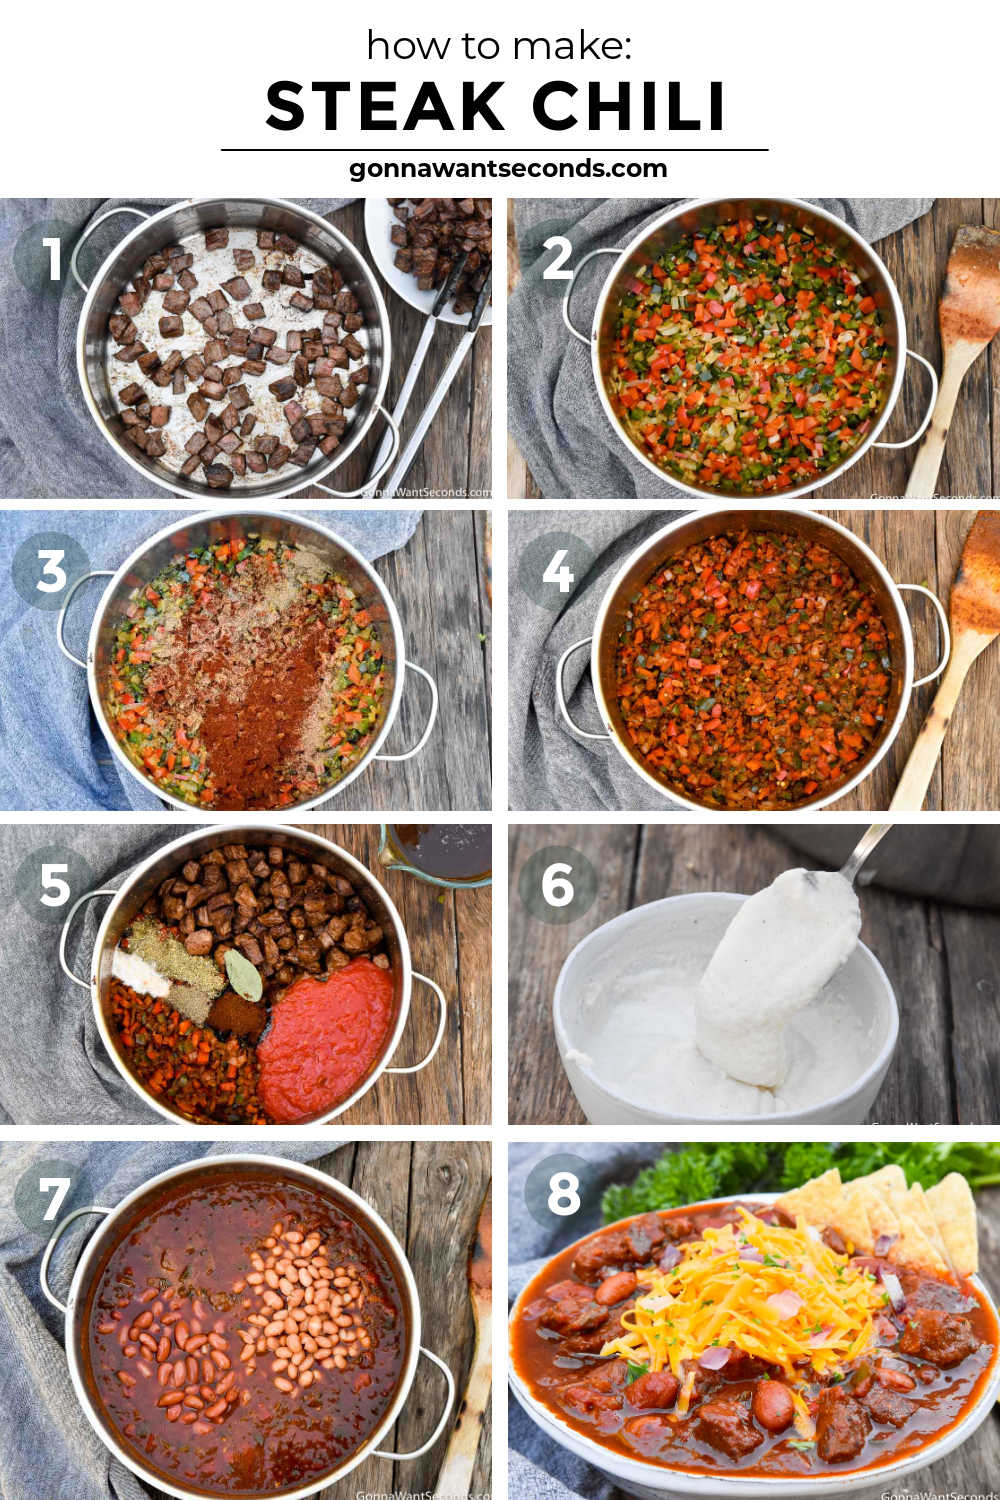 Step by step how to make steak chili